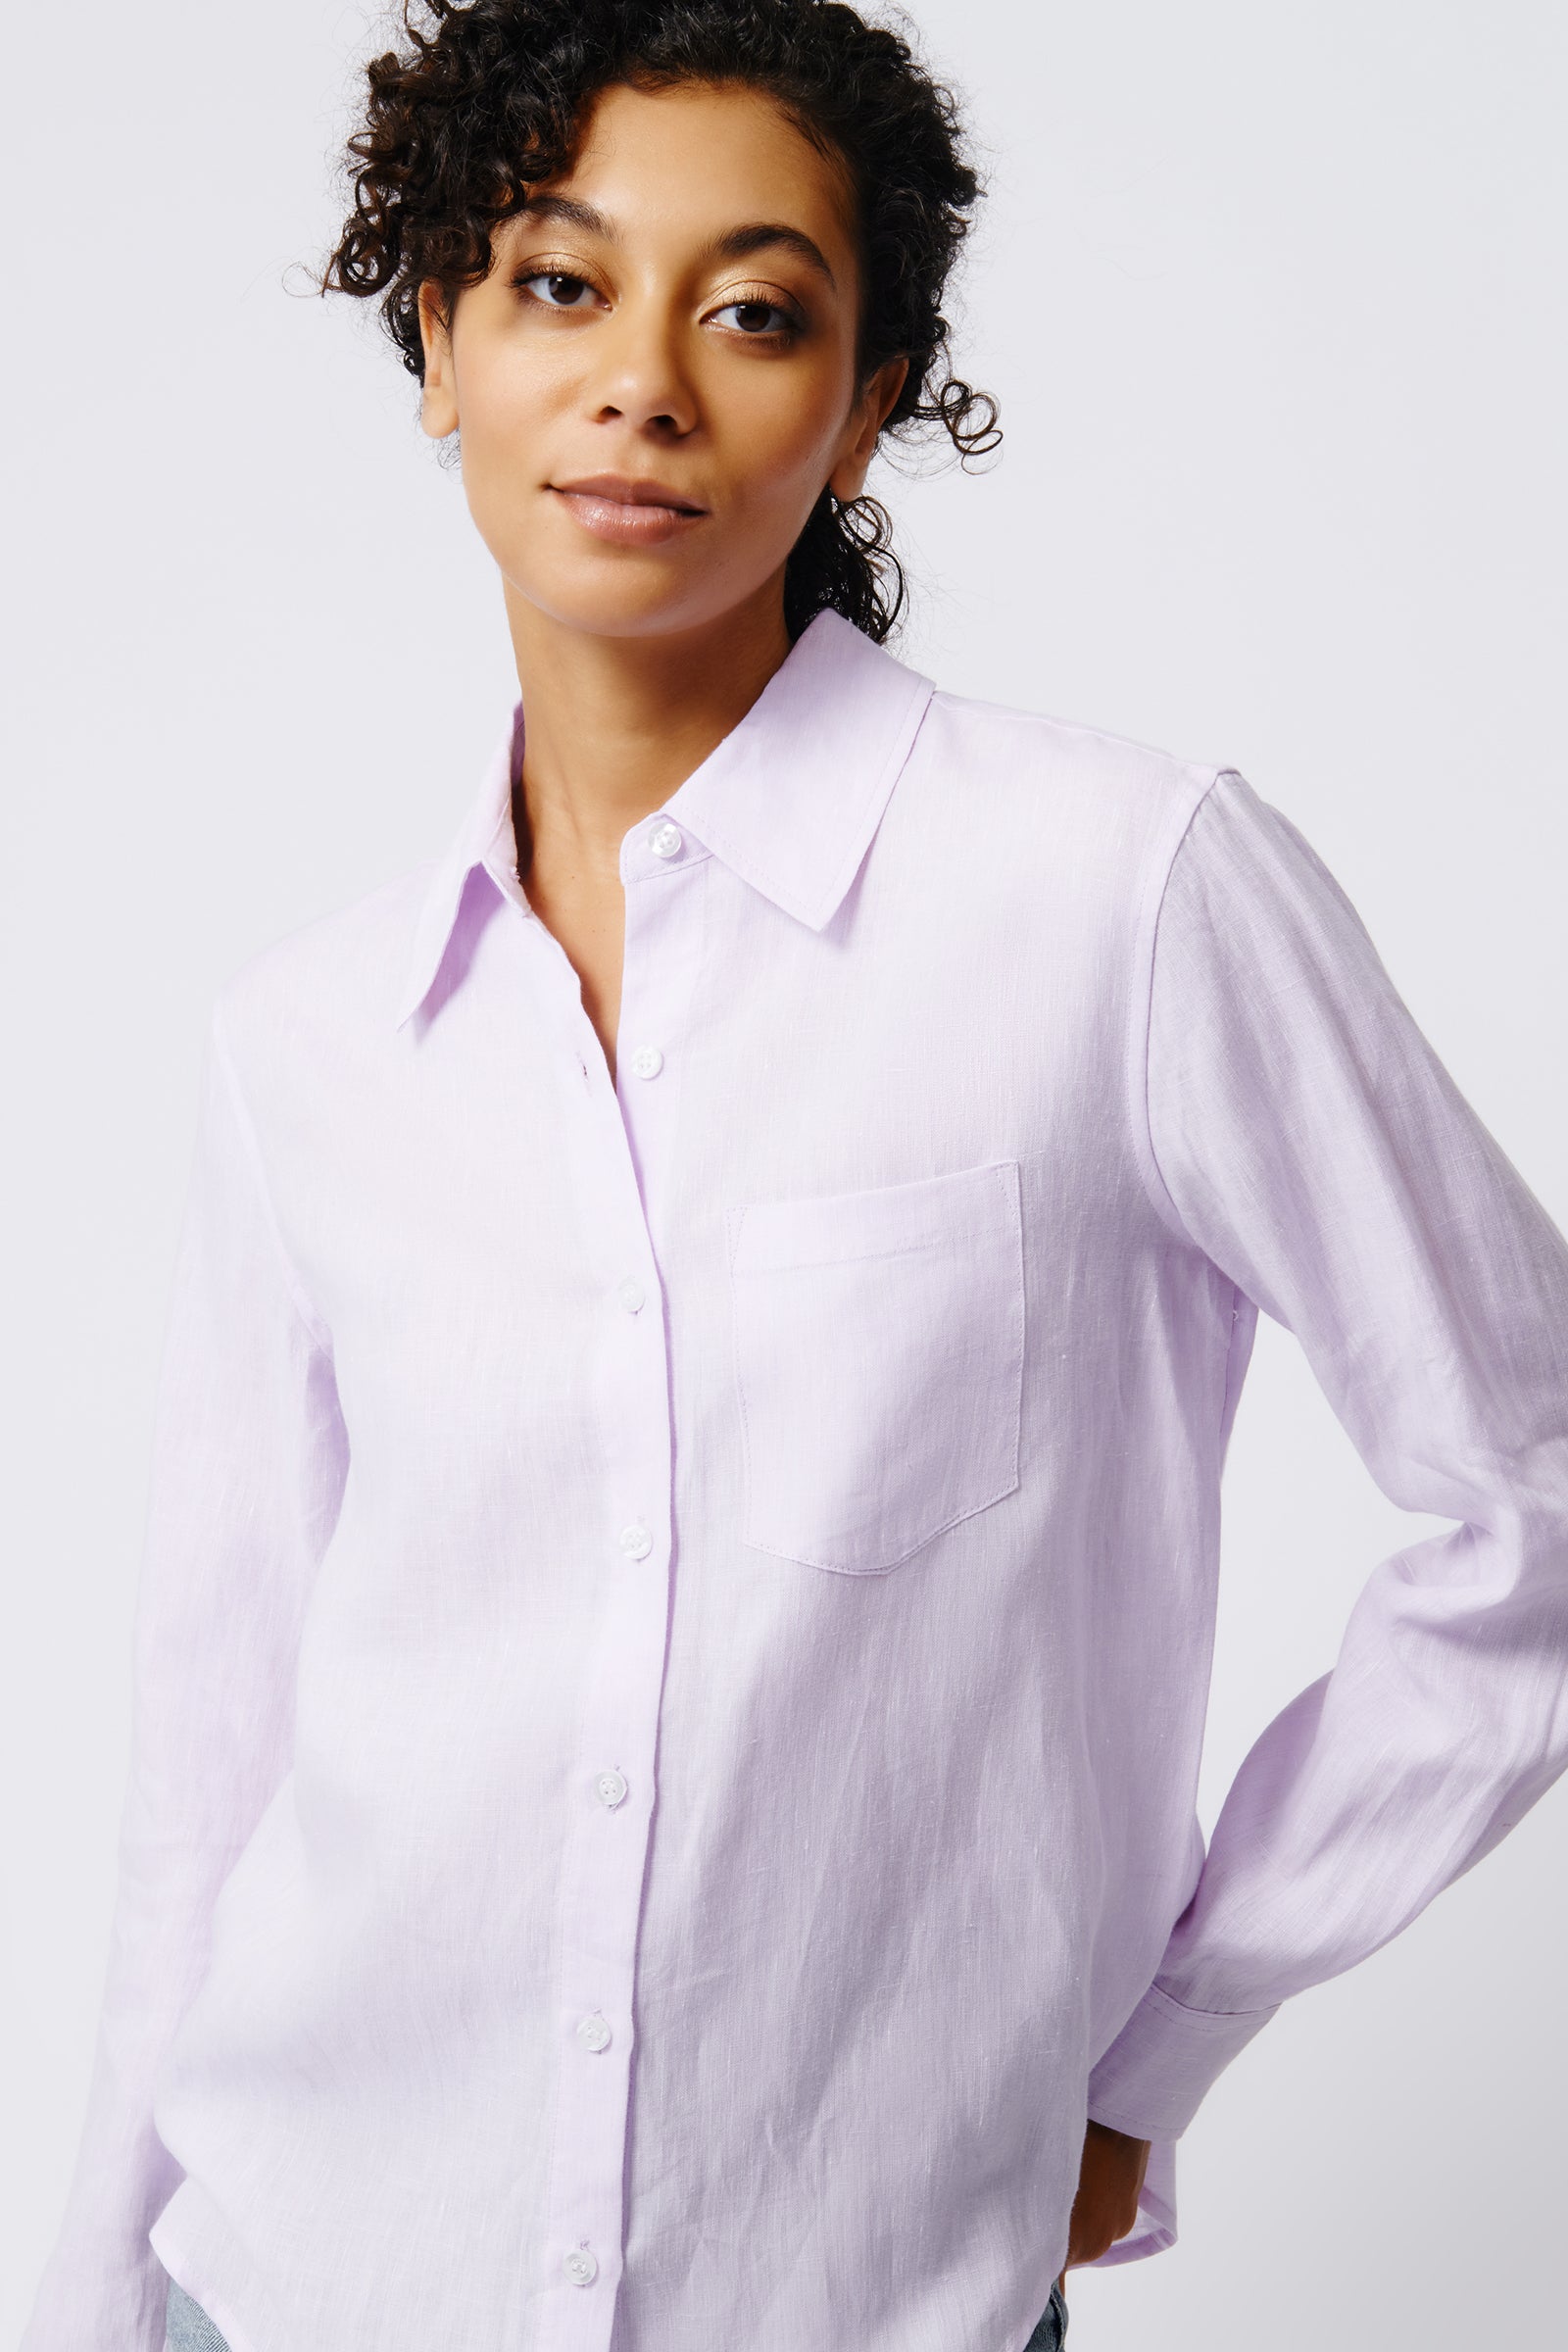 Kal Rieman Summer Shirt in Lavender on Model Front View Crop